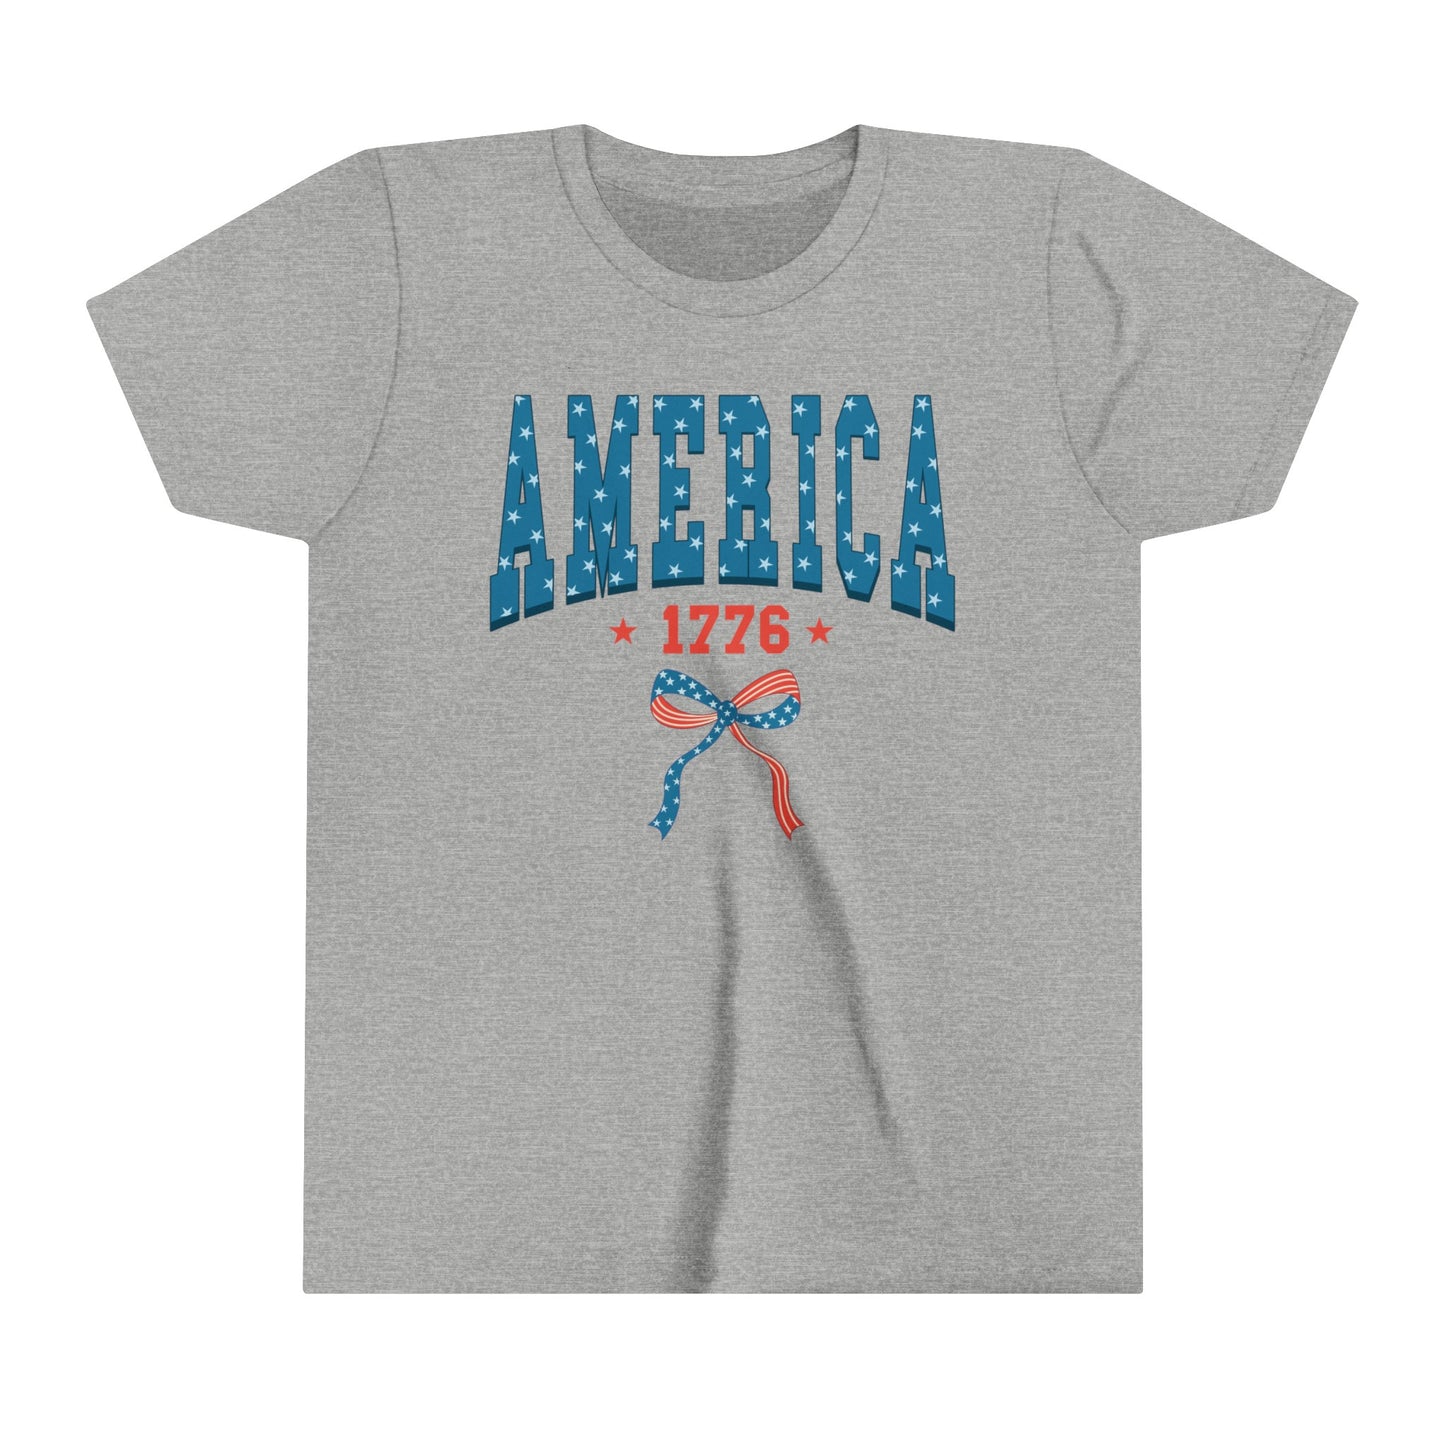 America Girl's Youth Shirt